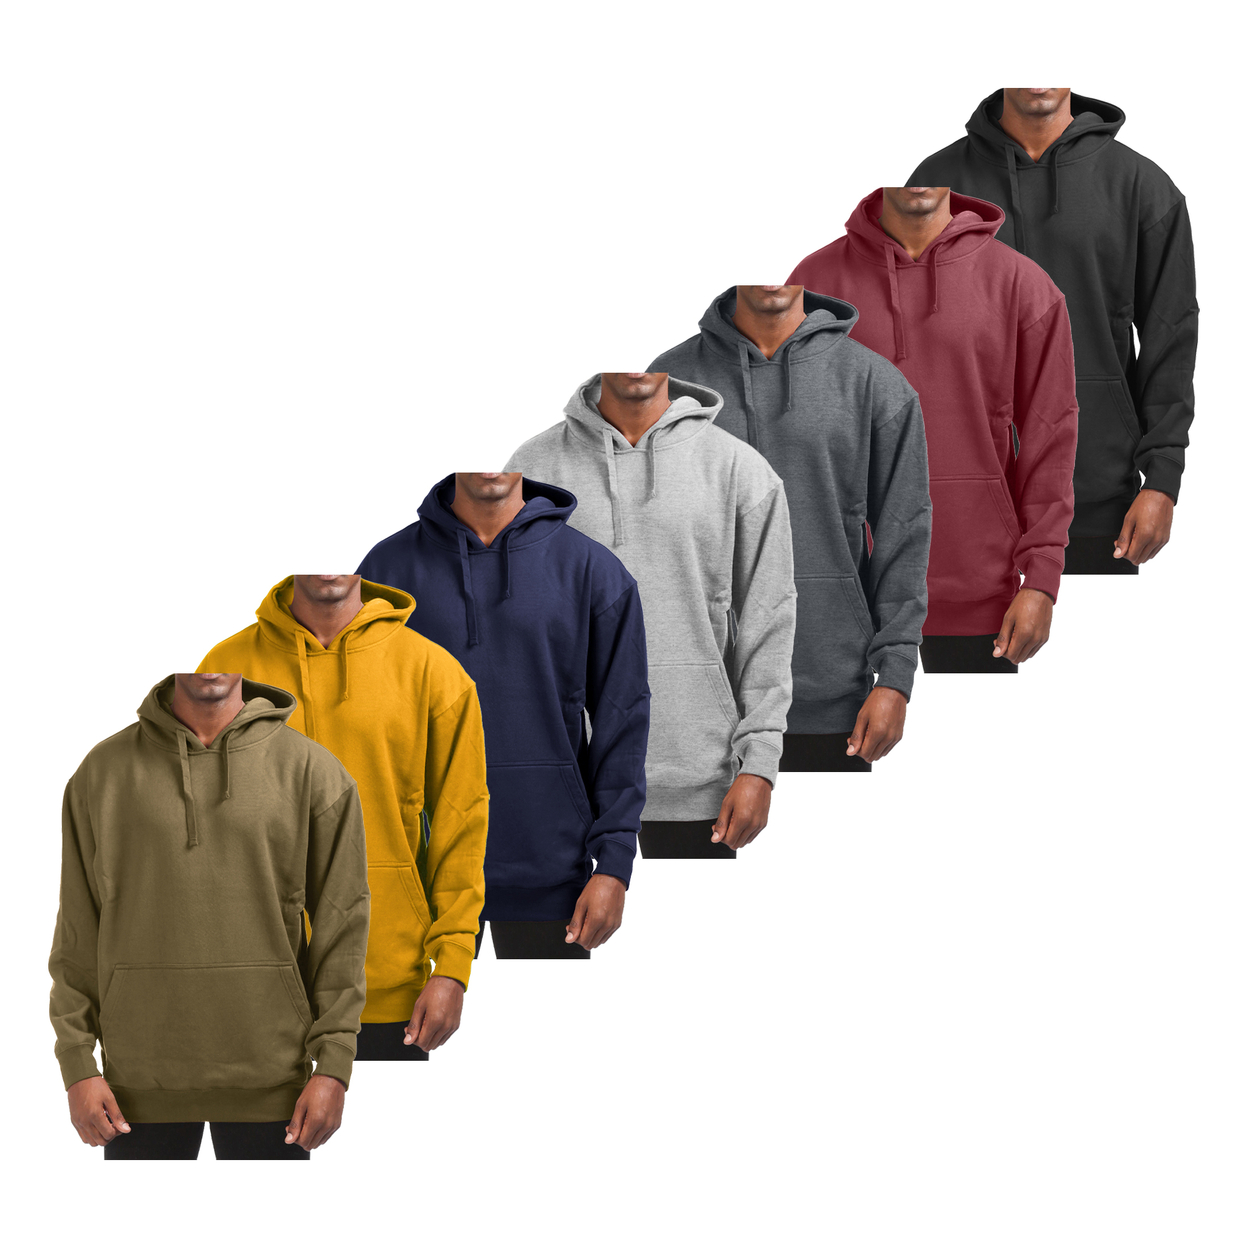 2-Pack: Men's Super-Soft Winter Warm Cotton-Blend Fleece Pullover Hoodie With Kangaroo Pocket - Black & Navy, X-large